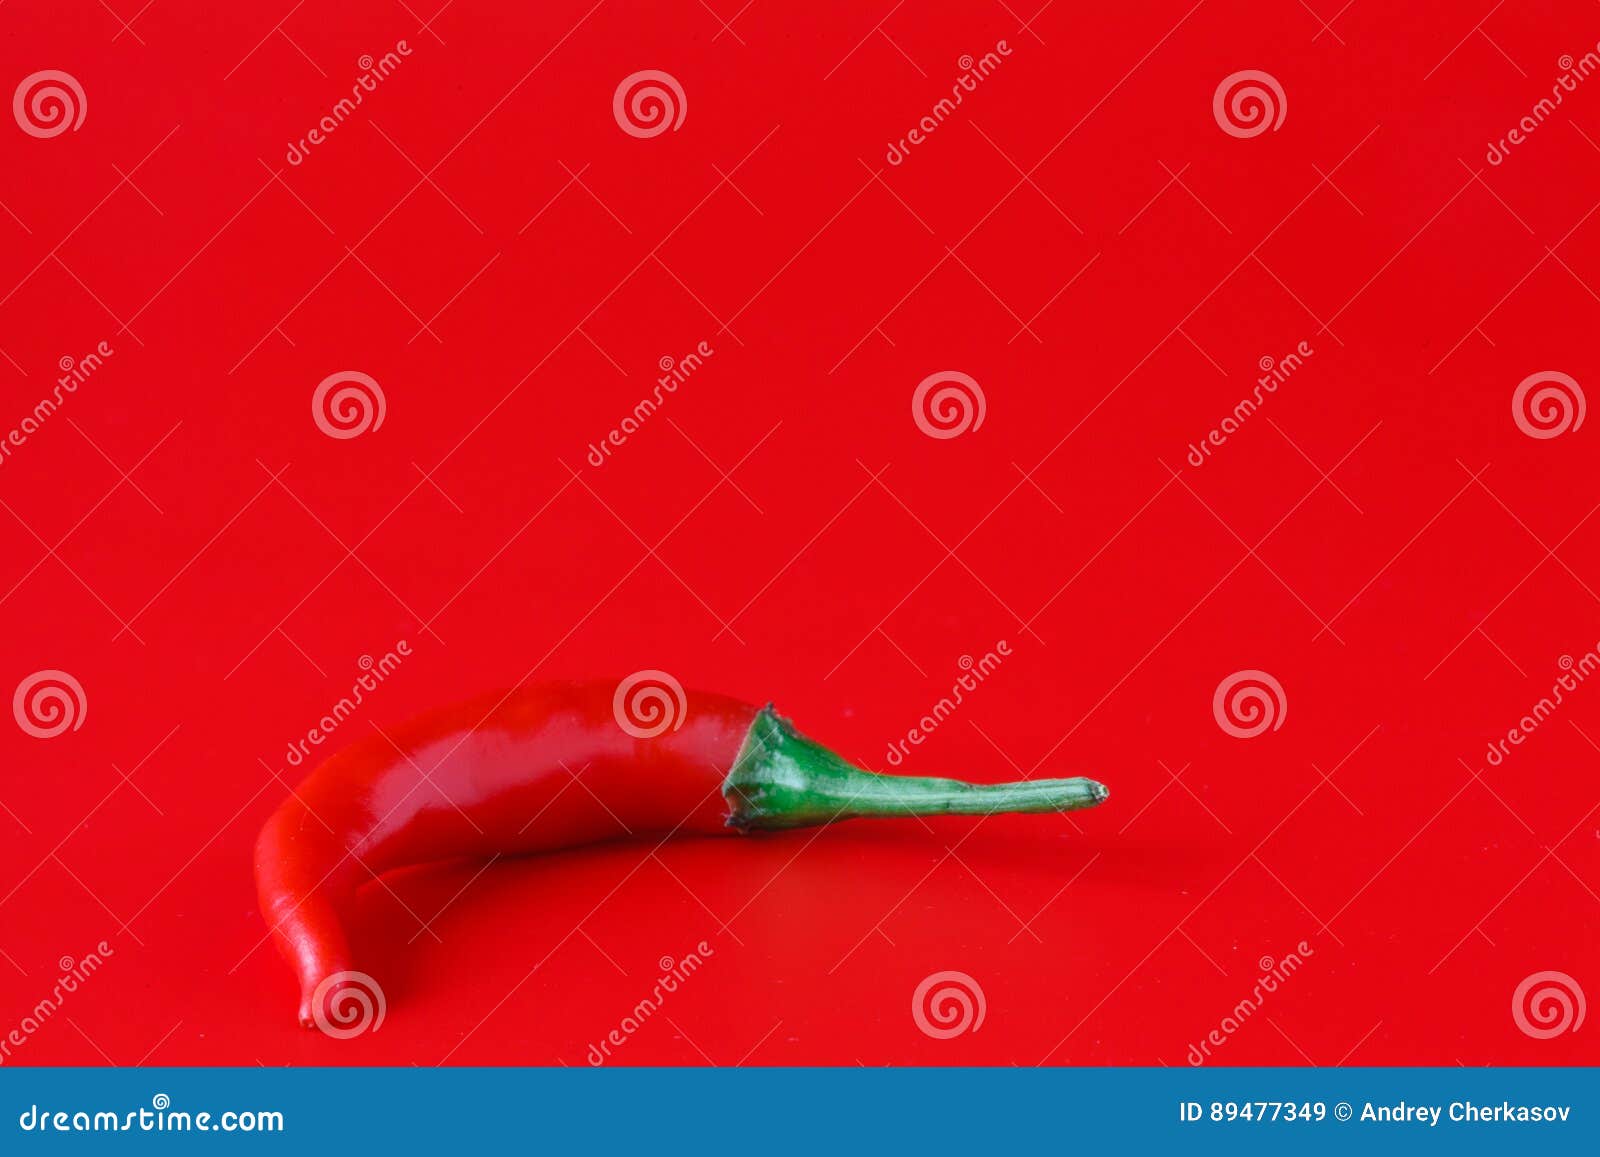 fresh chili pepper on plain red background